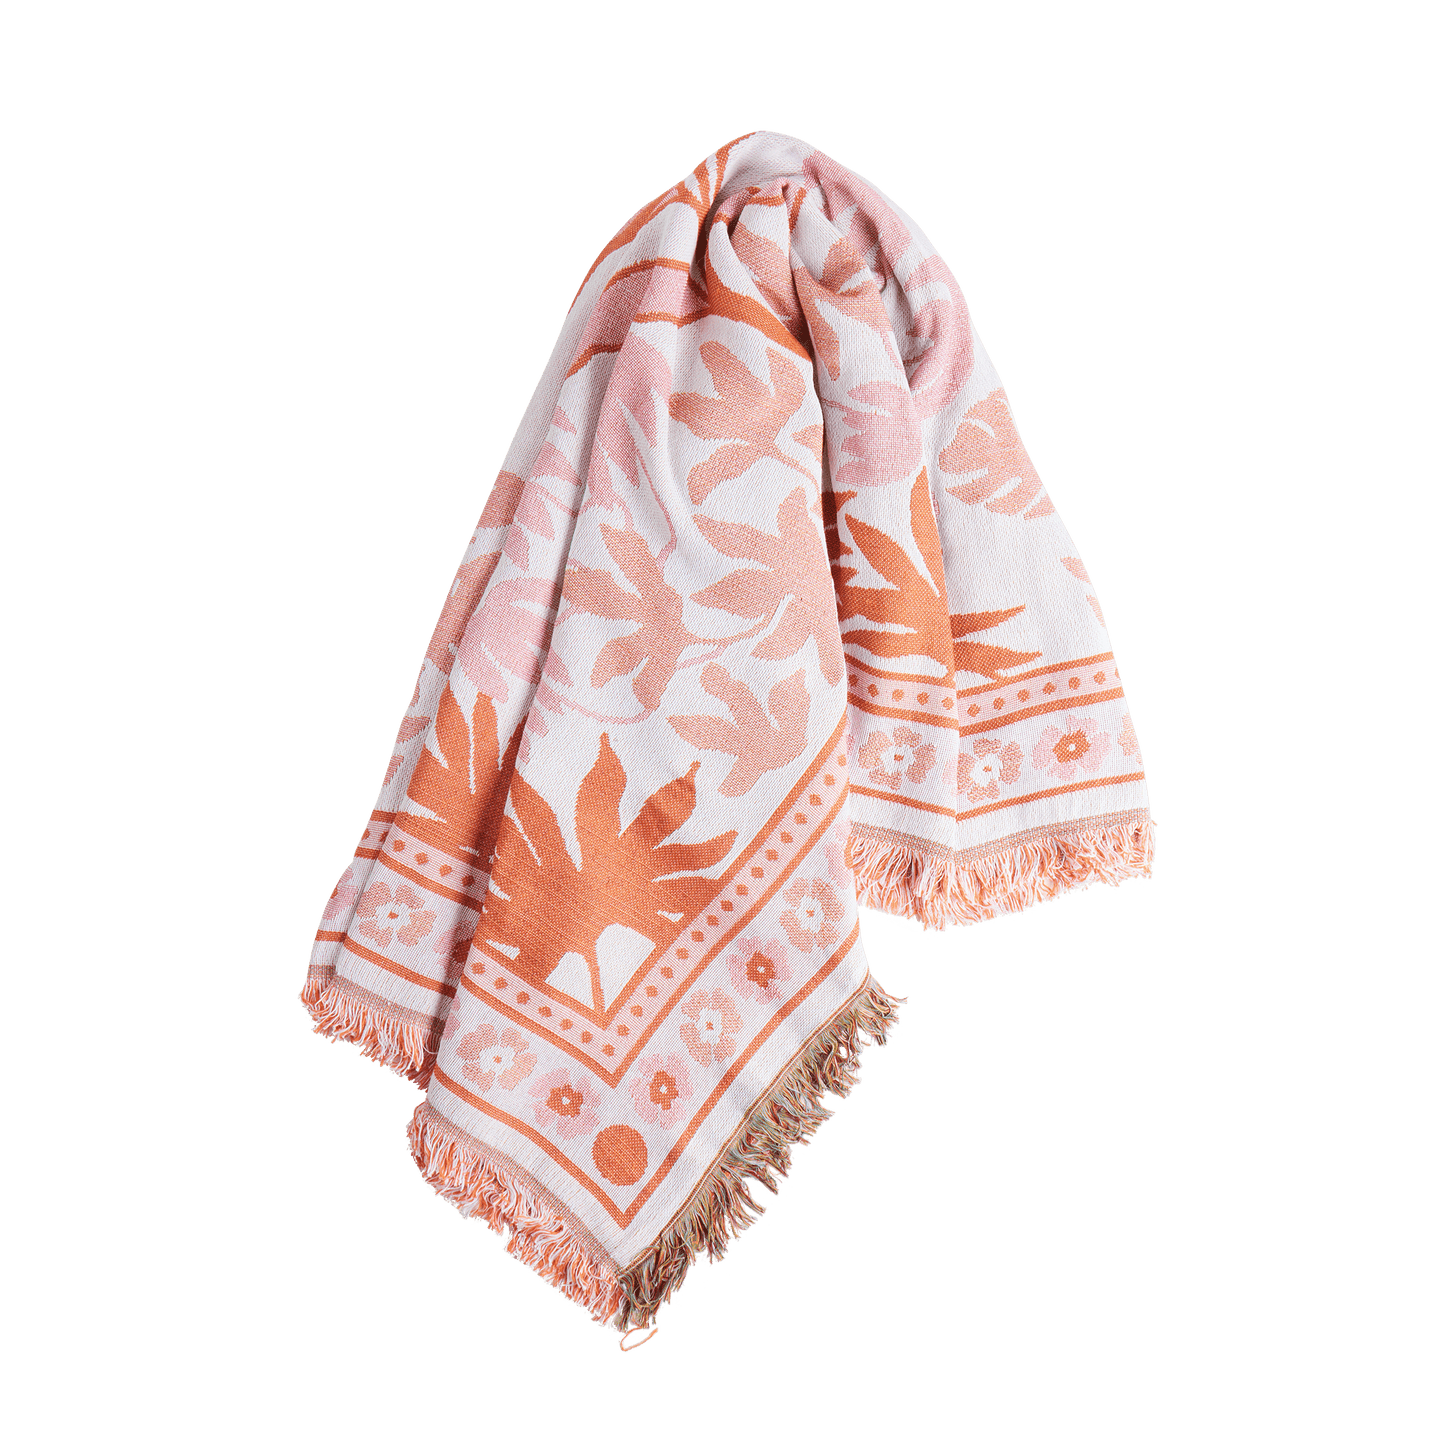 The Liana Woven Blanket